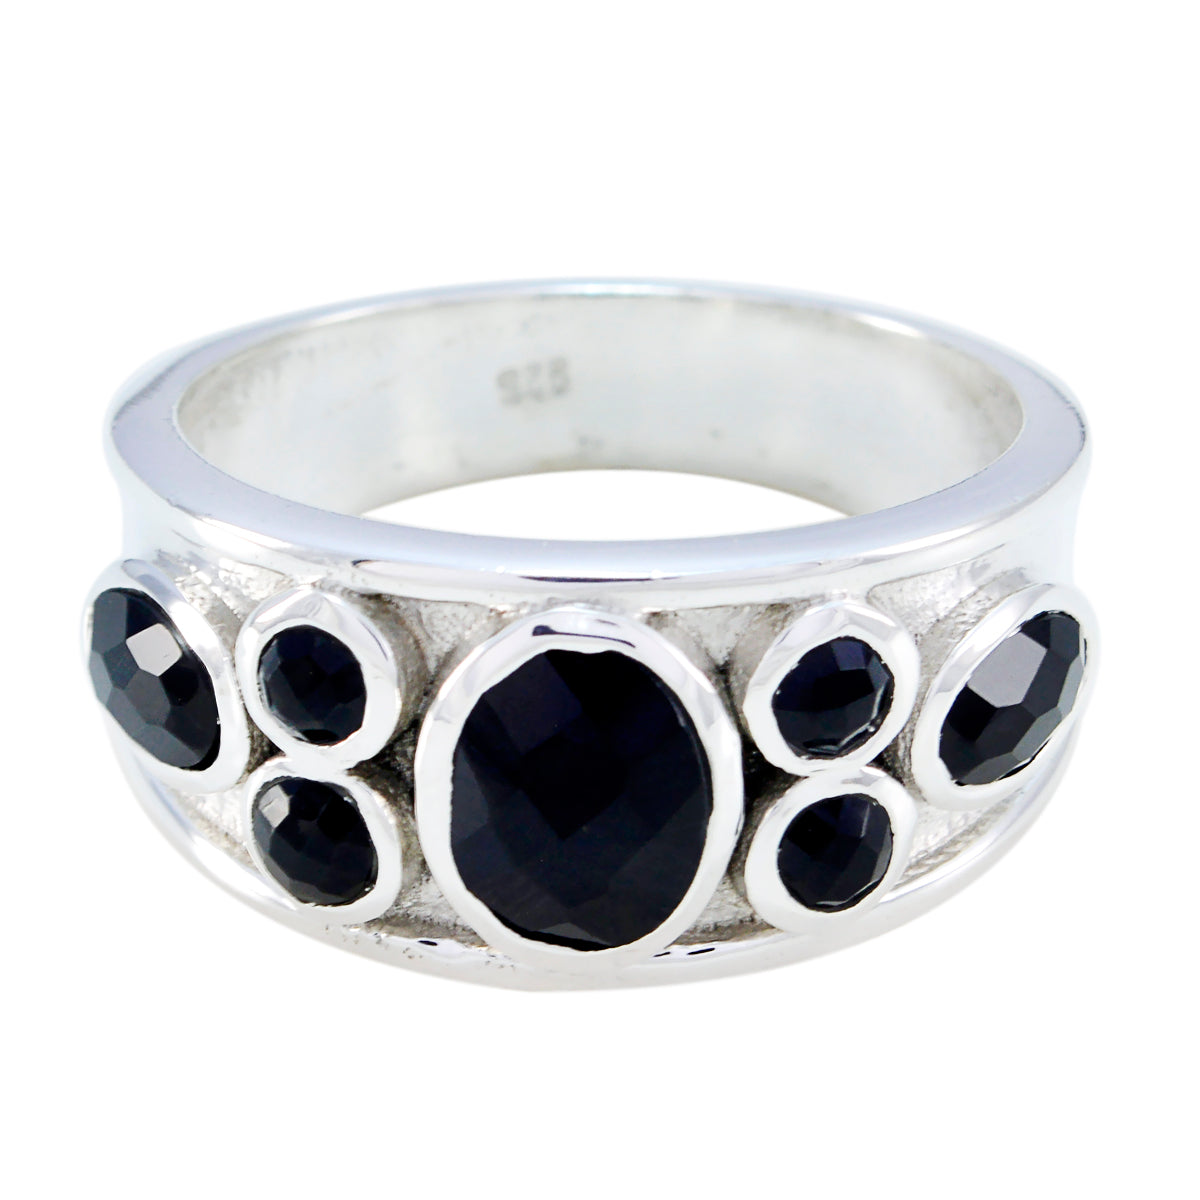 Riyo Good Gemstones Black Onyx Sterling Silver Ring Jewelry Com